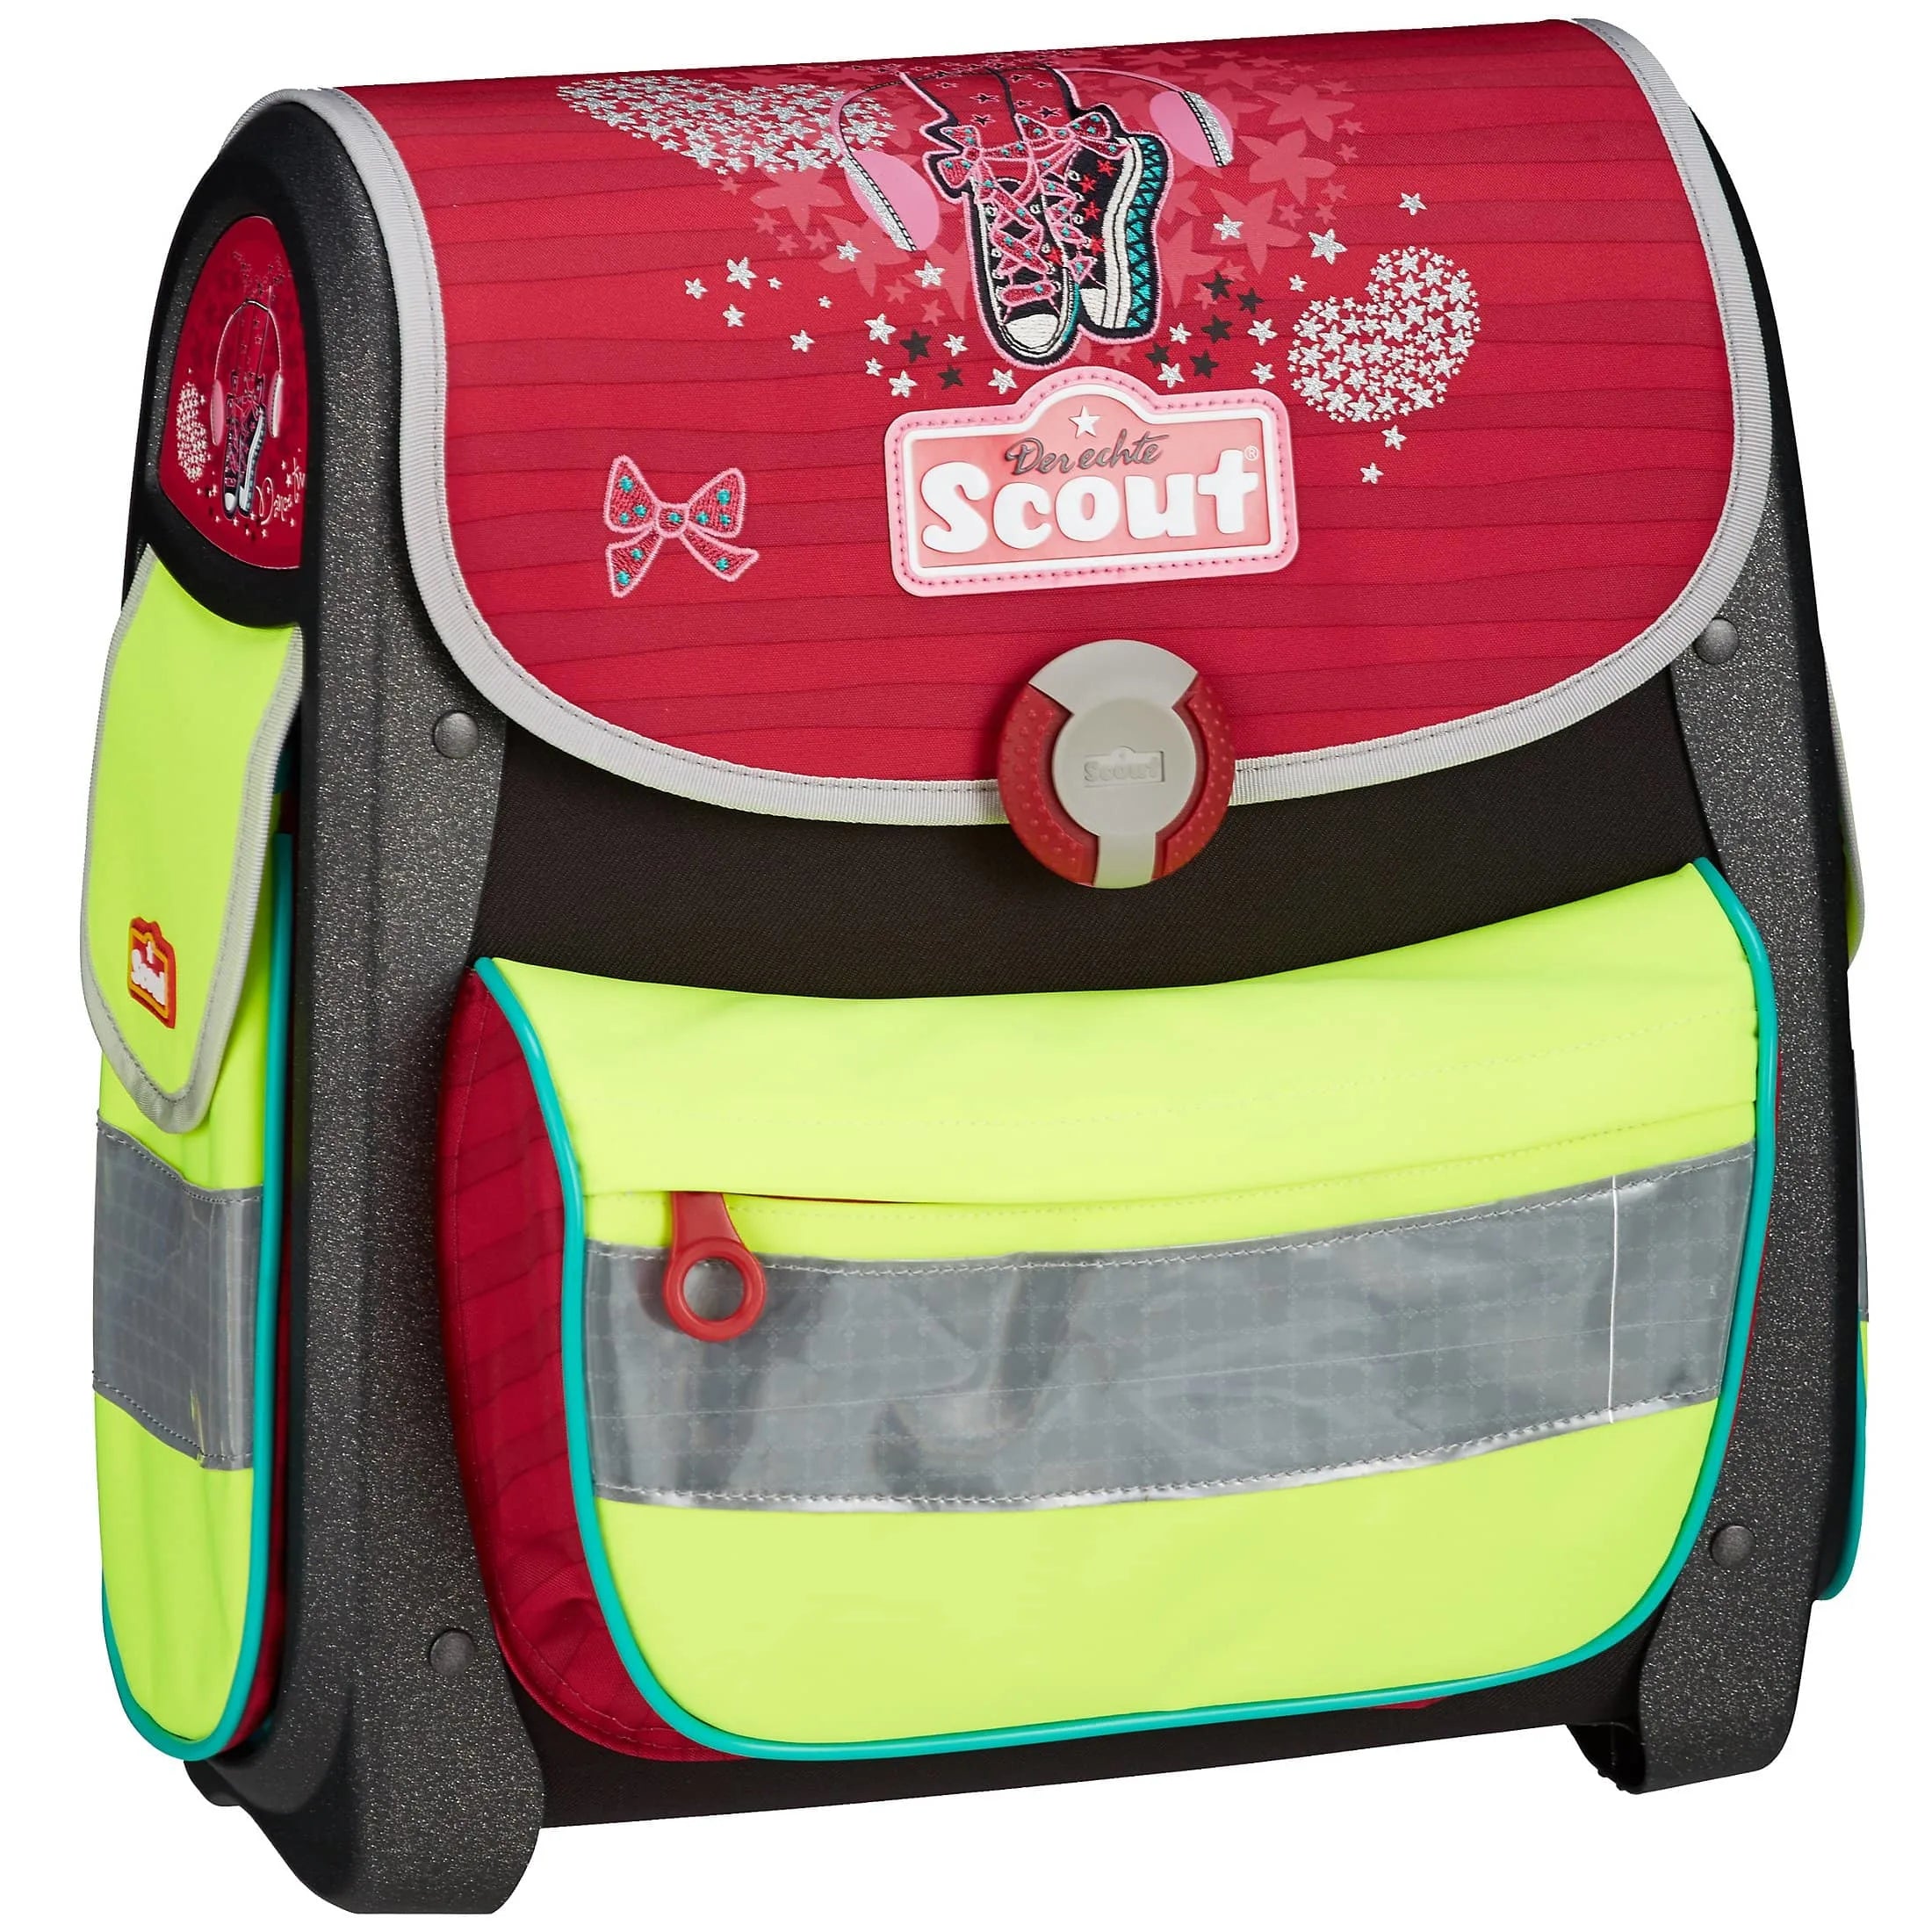 Scout Buddy Limited Edition 5-piece satchel set - Dance II